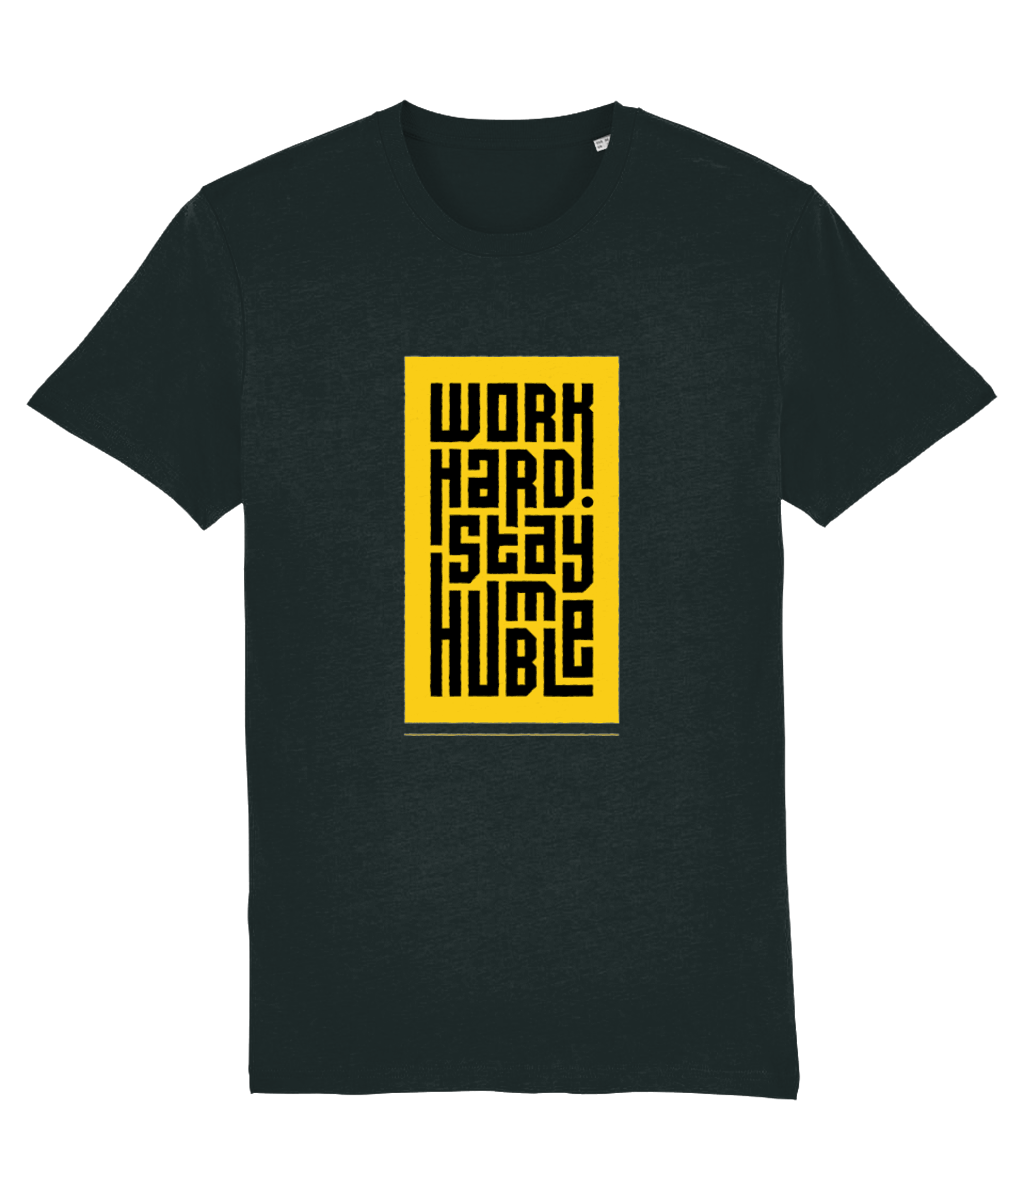 Work Hard Stay Humble - T-shirt